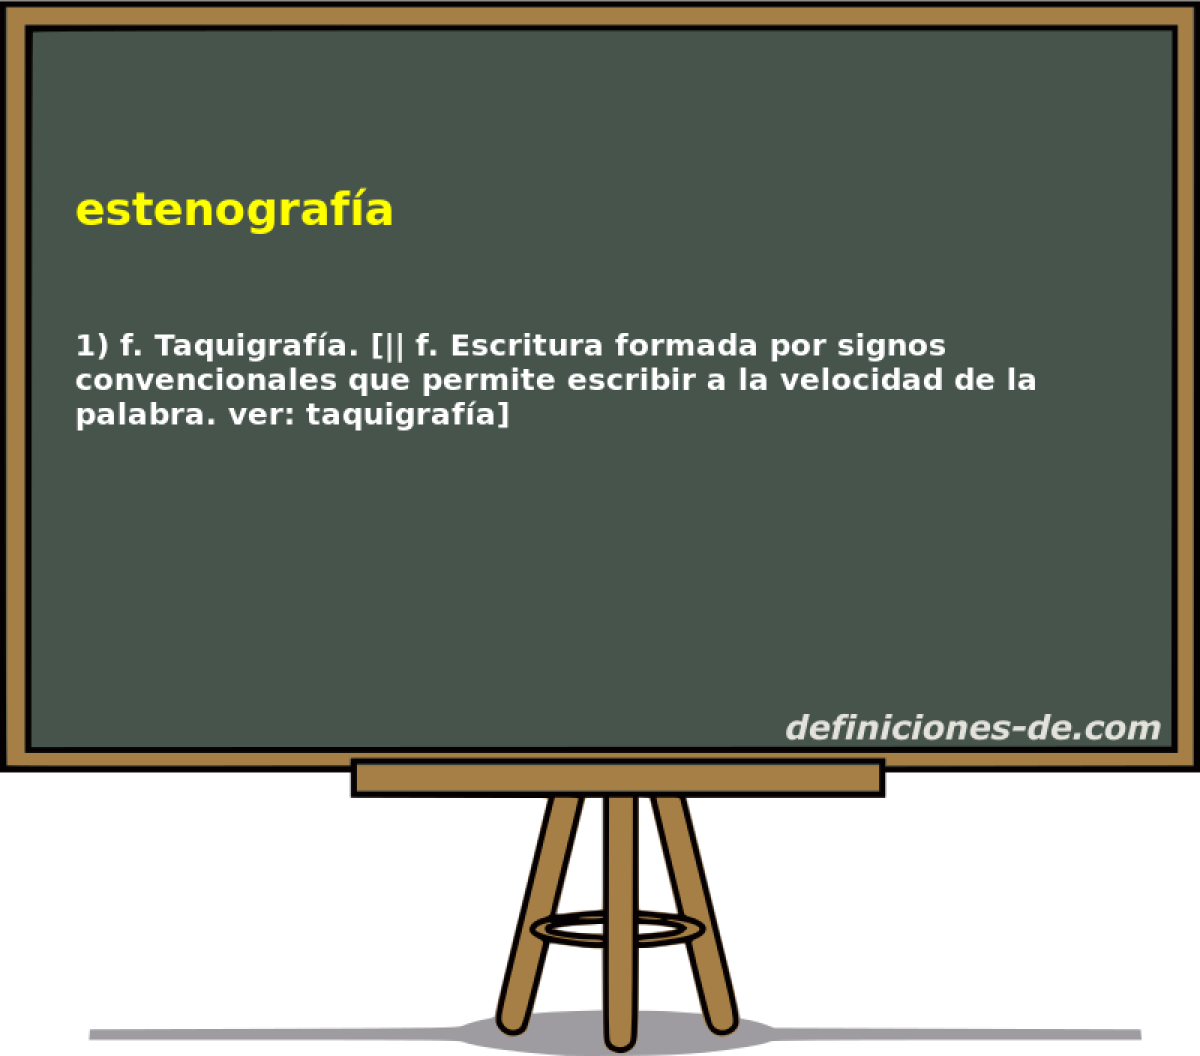 estenografa 